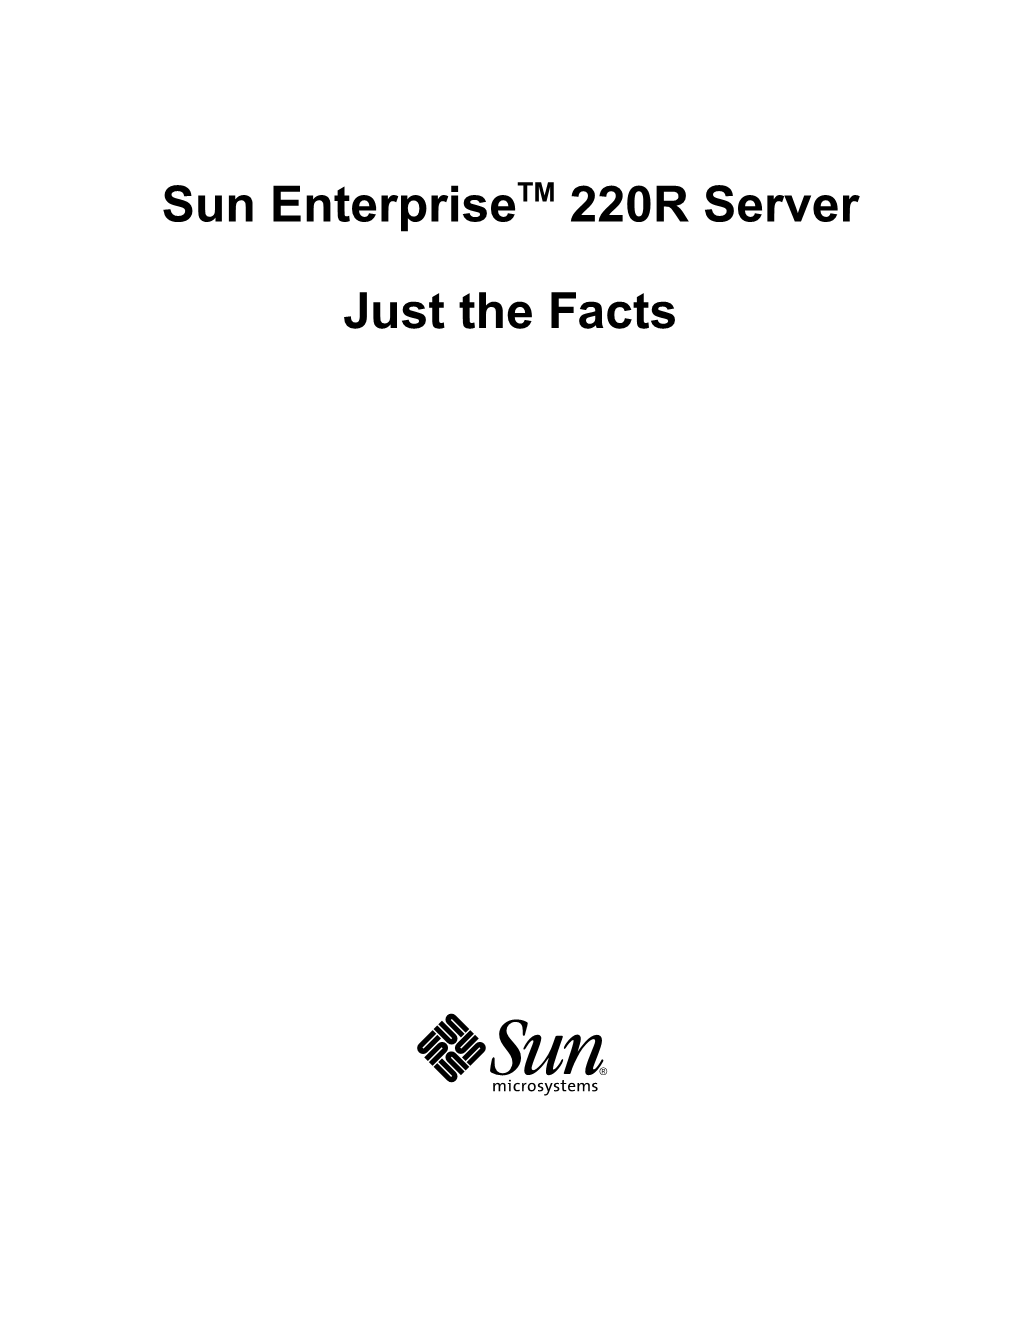 Sun Enterprisetm 220R Server Just the Facts